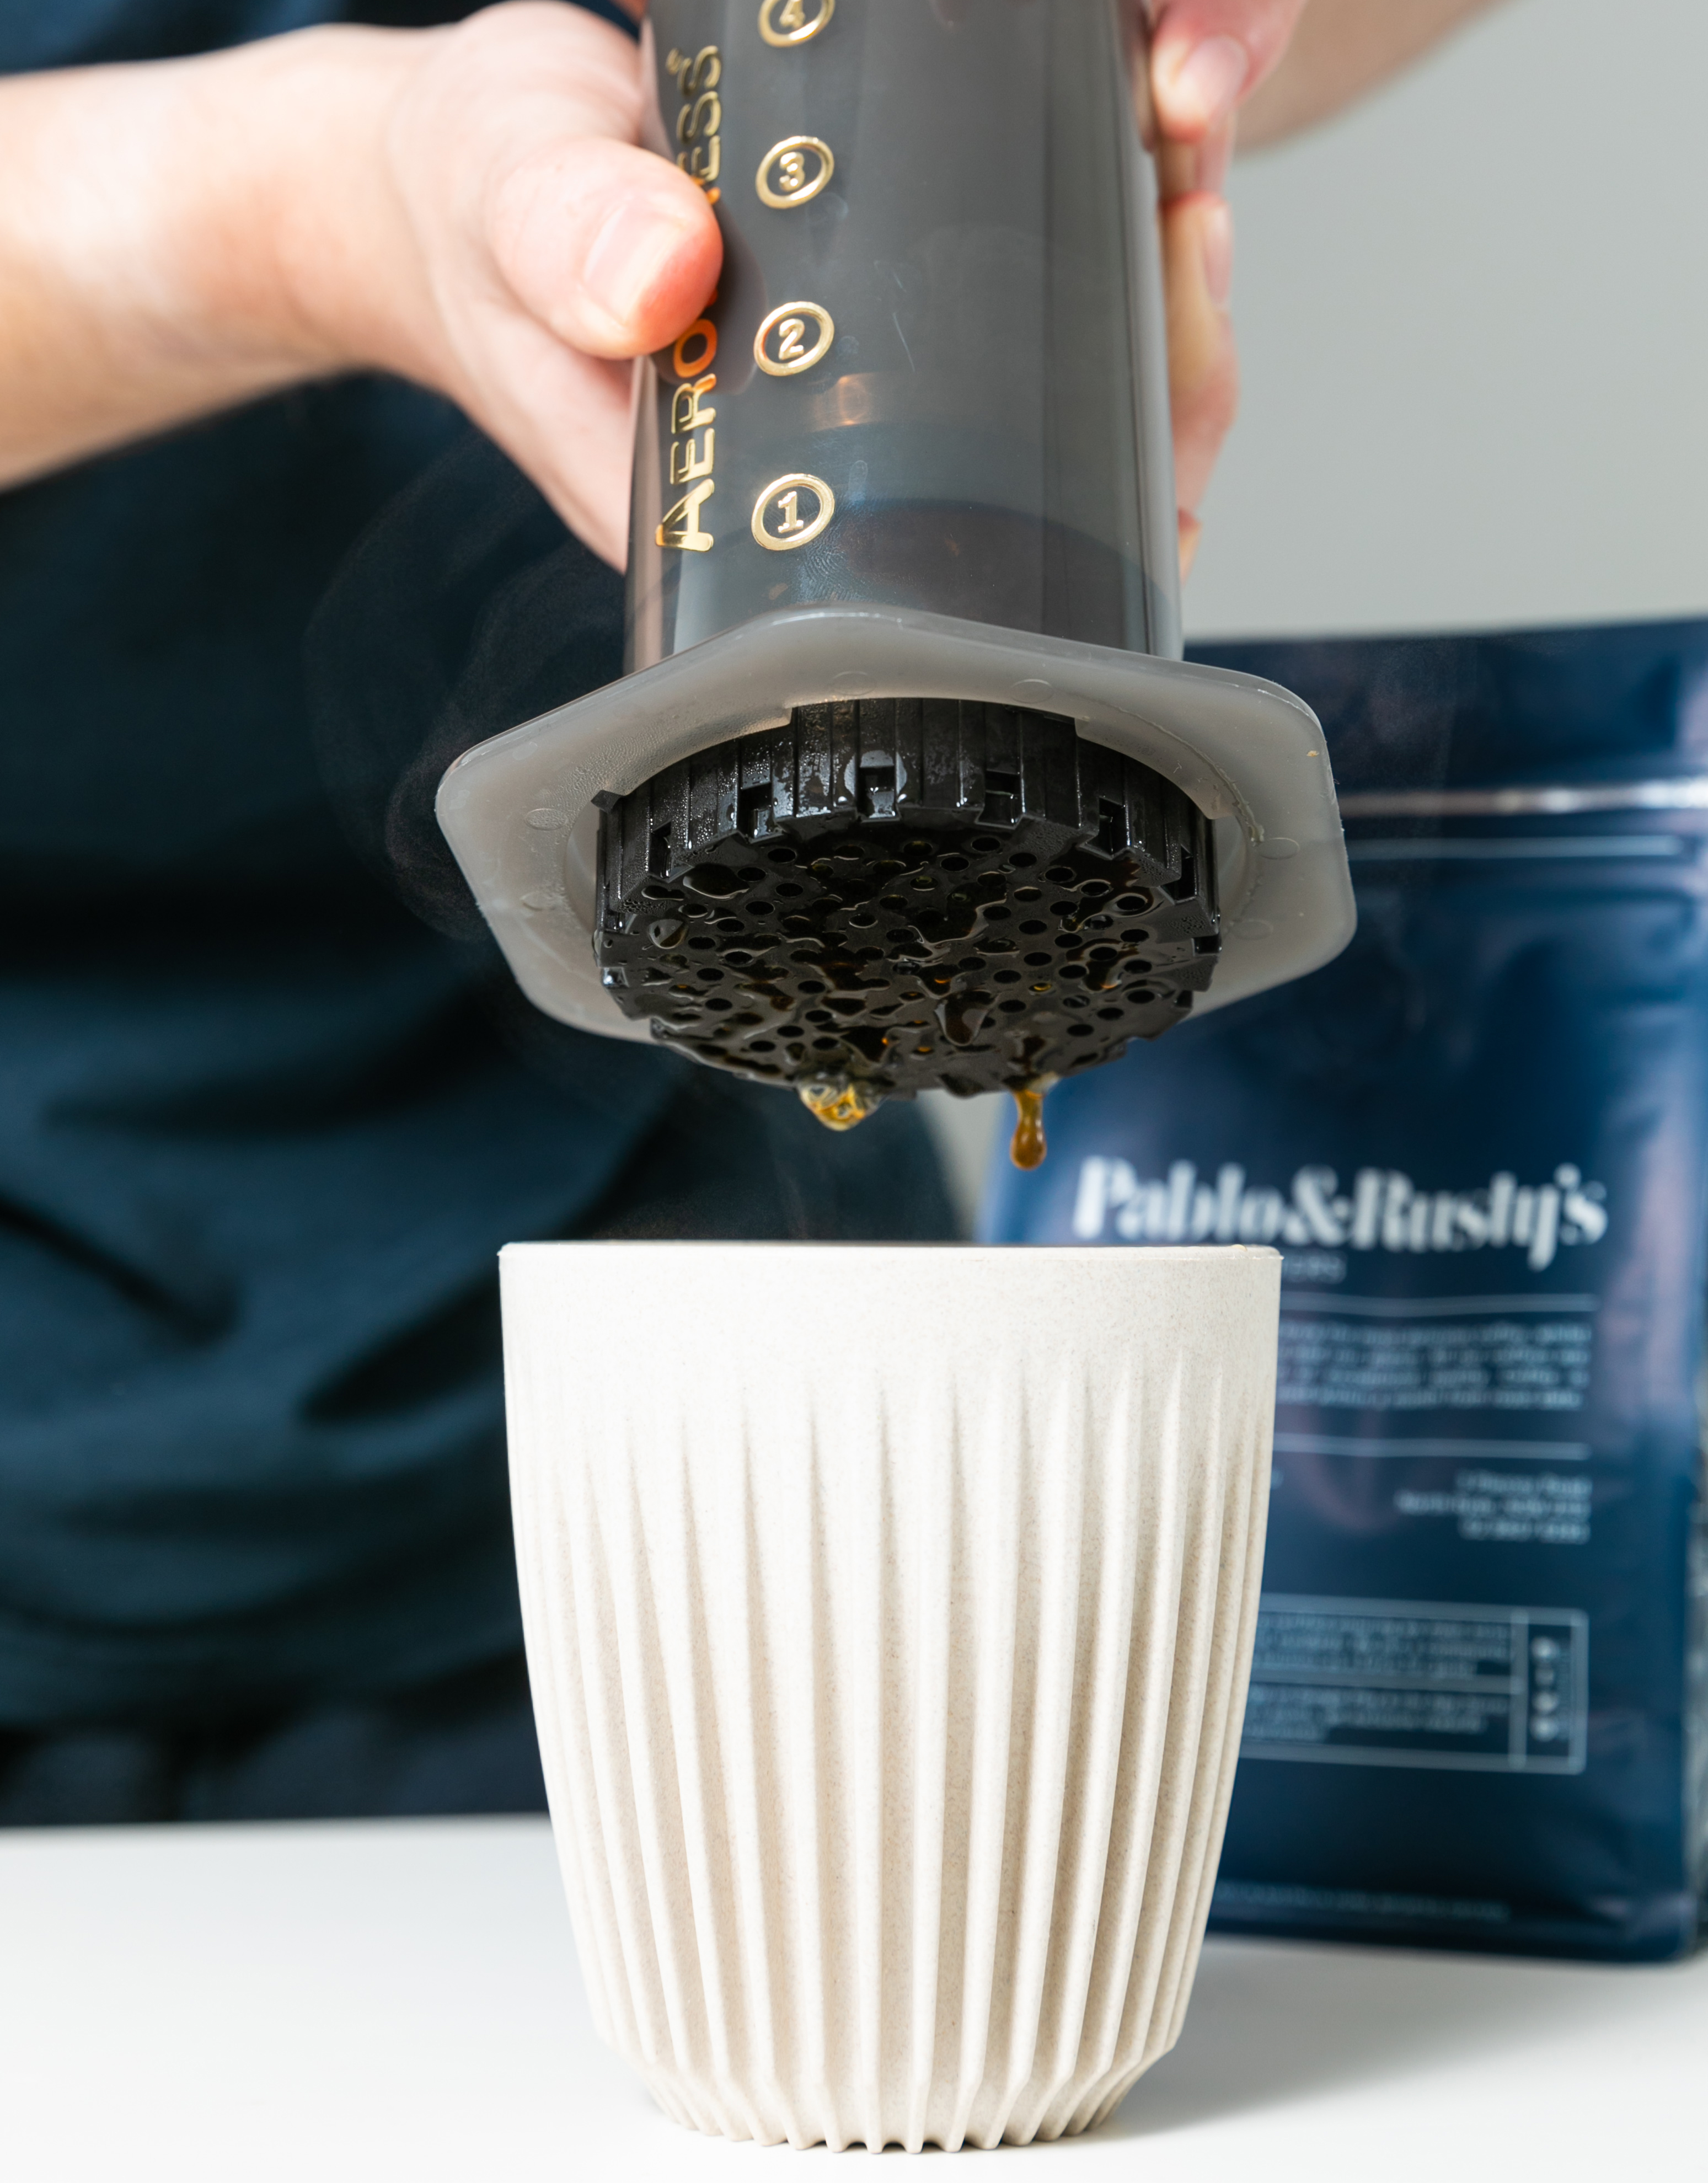 Extracting coffee using Aeropress 